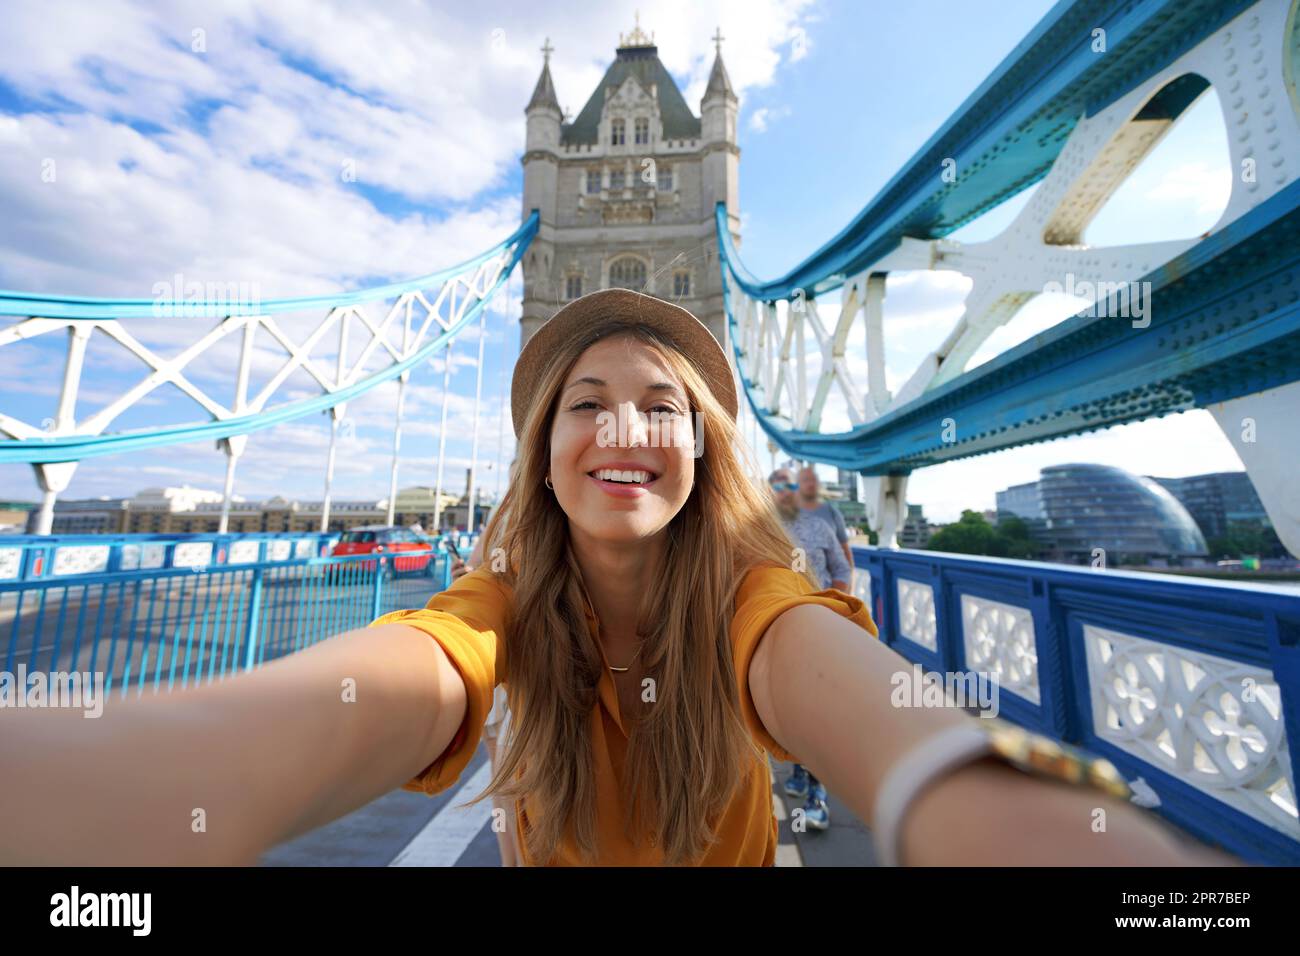 Smiling girl takes selfie photo on Tower Bridge in London, United Kingdom Stock Photo